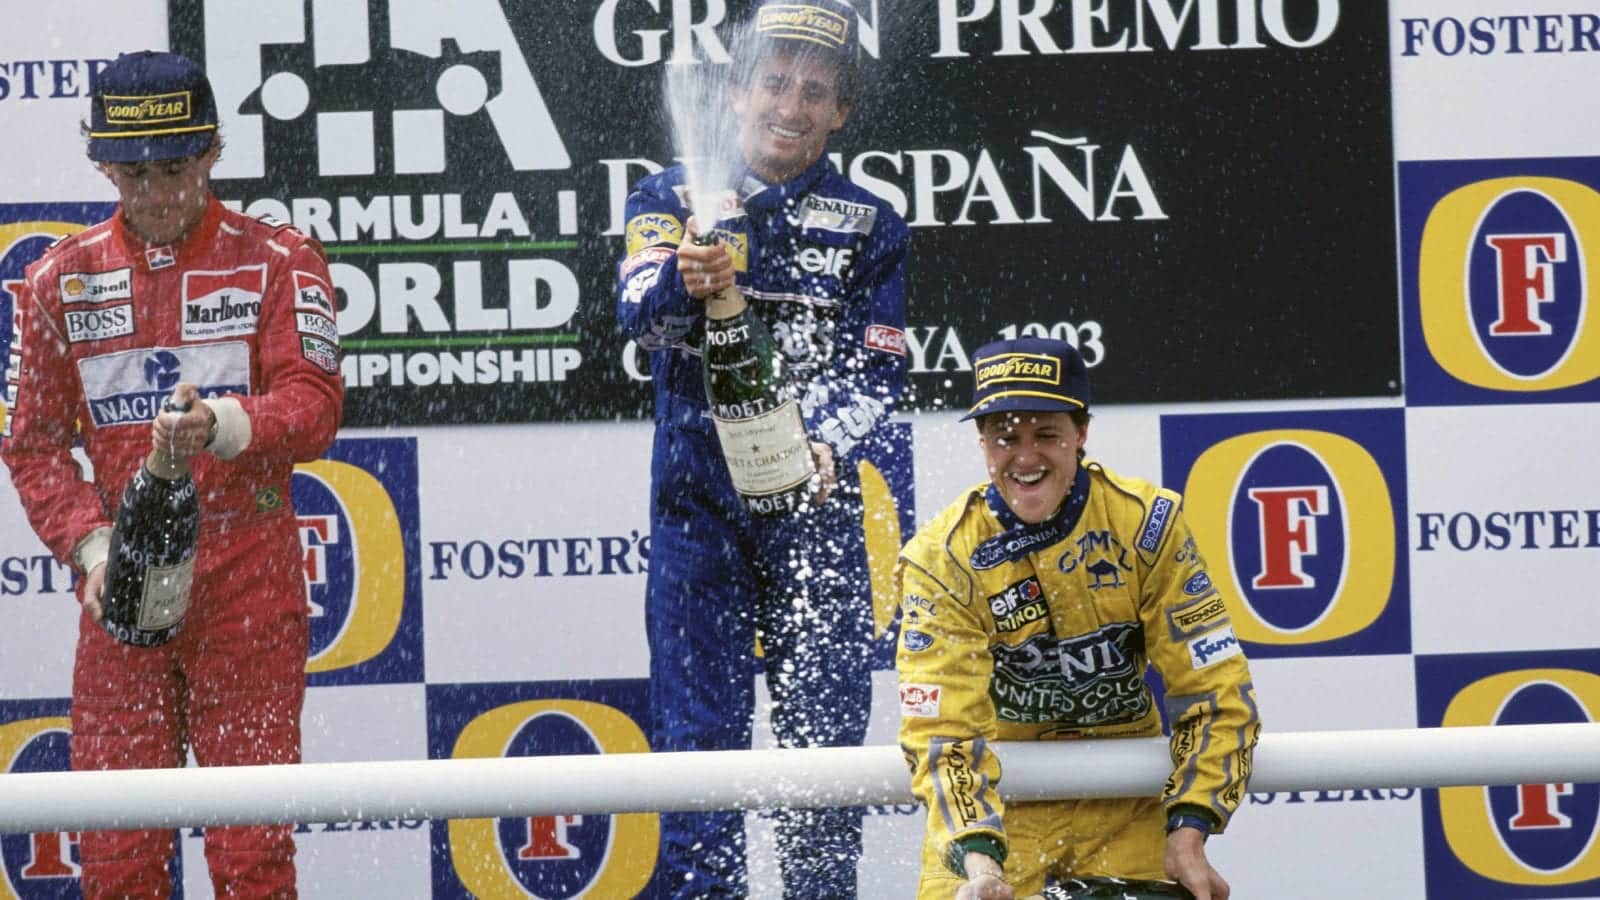 Alain Prost Ayrton Senna and Michael Schumacher on the podium after the 1993 Spanish Grand Prix